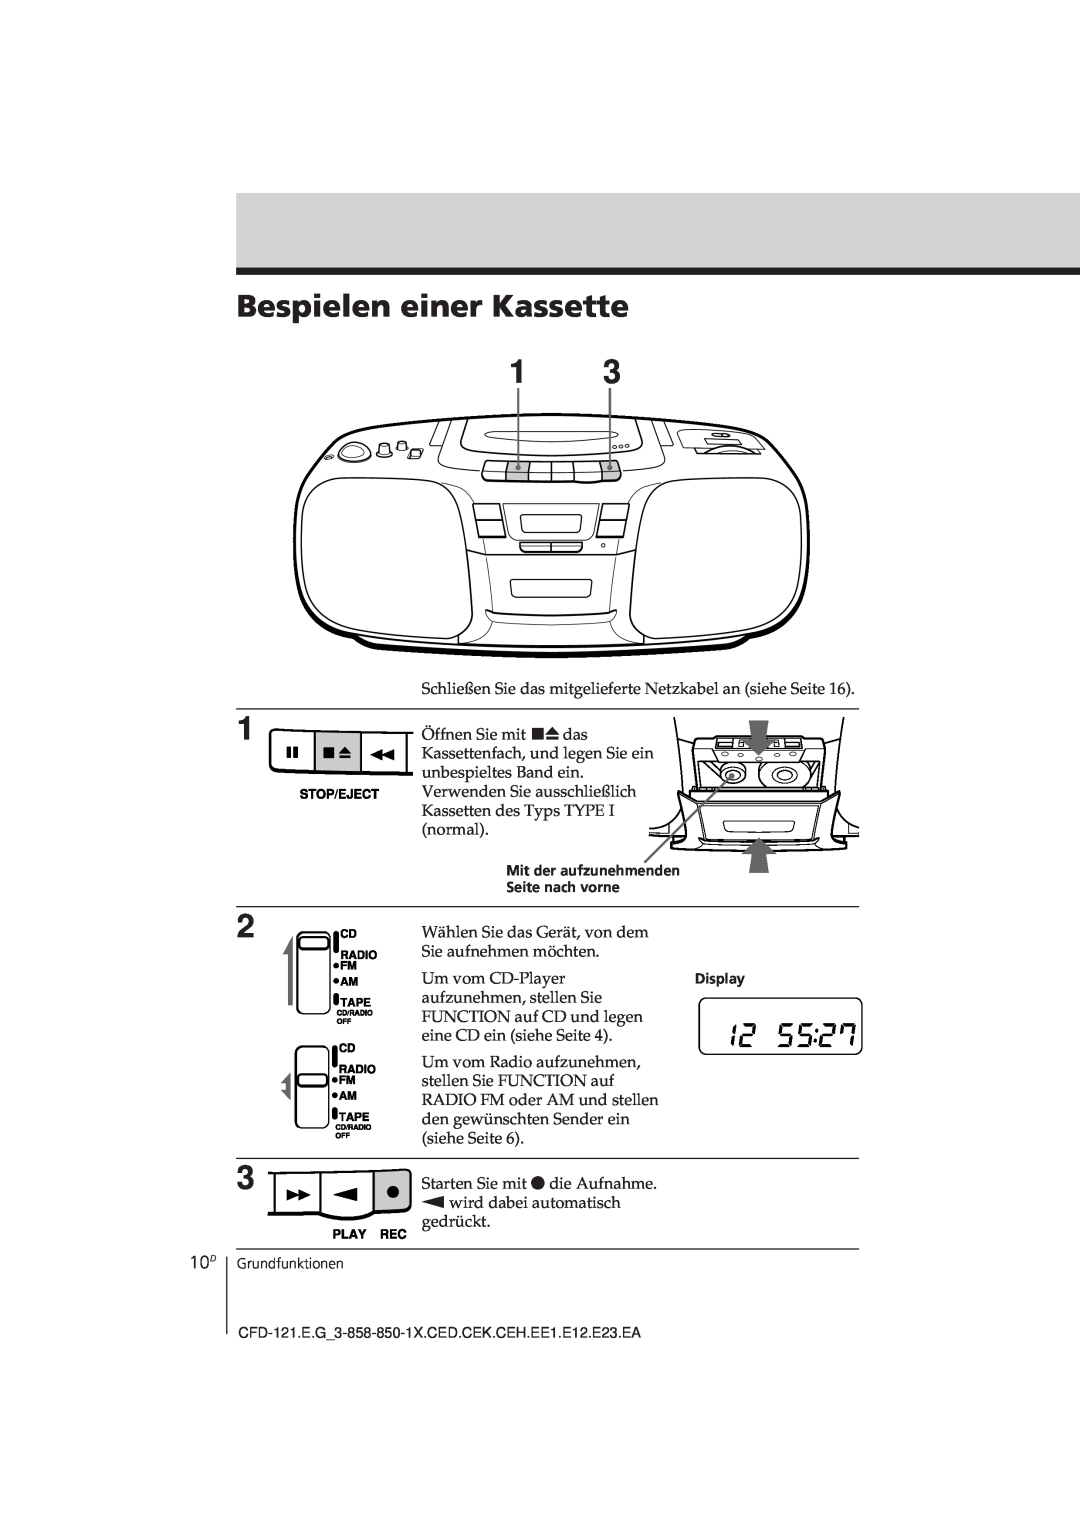 Sony CFD-121 operating instructions Bespielen einer Kassette 